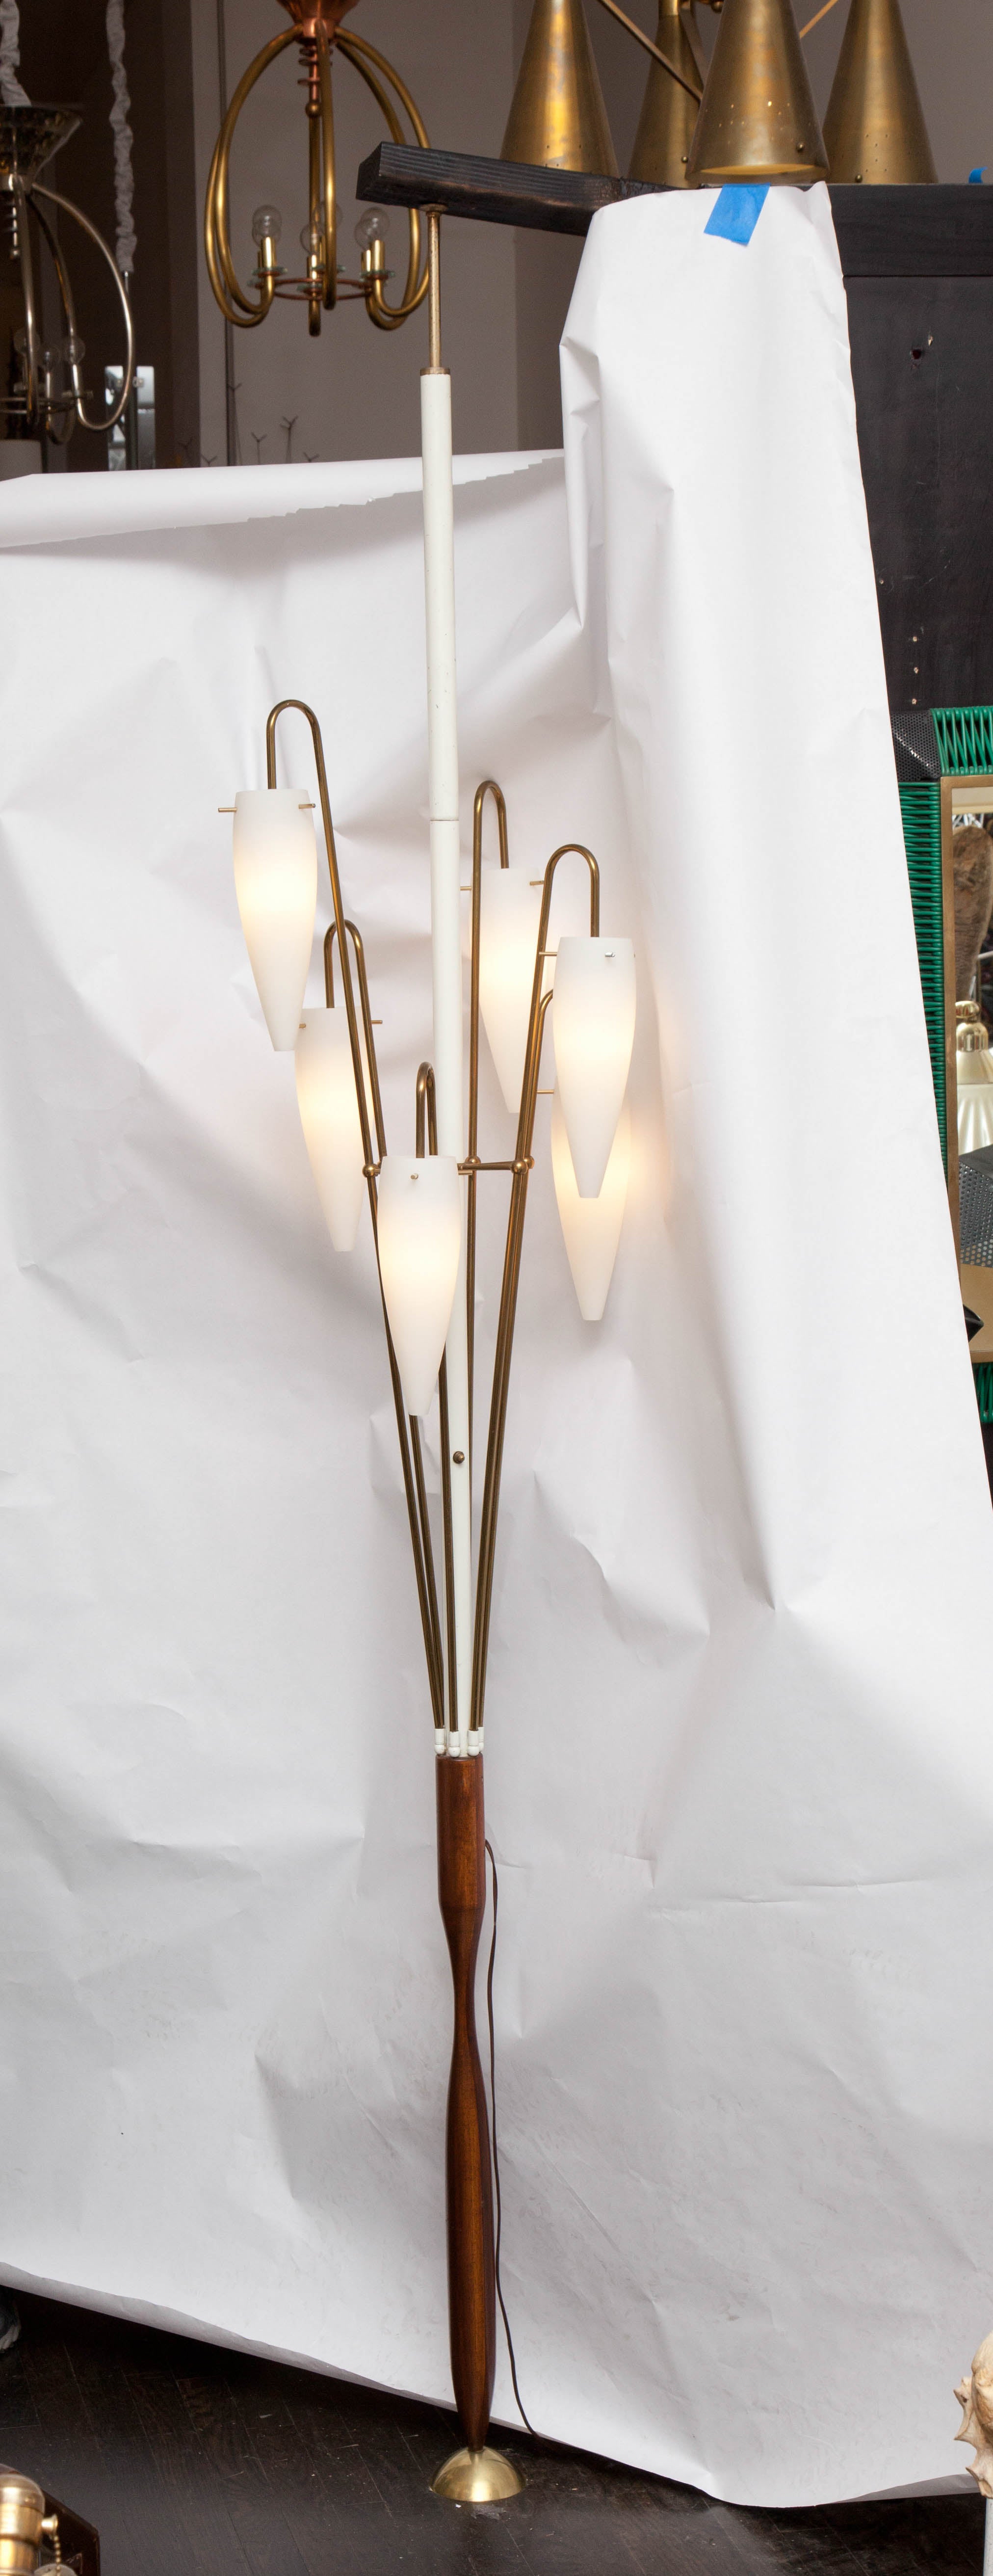 1950s Italian Modernist Pole Lamp Attributed to Stilnovo